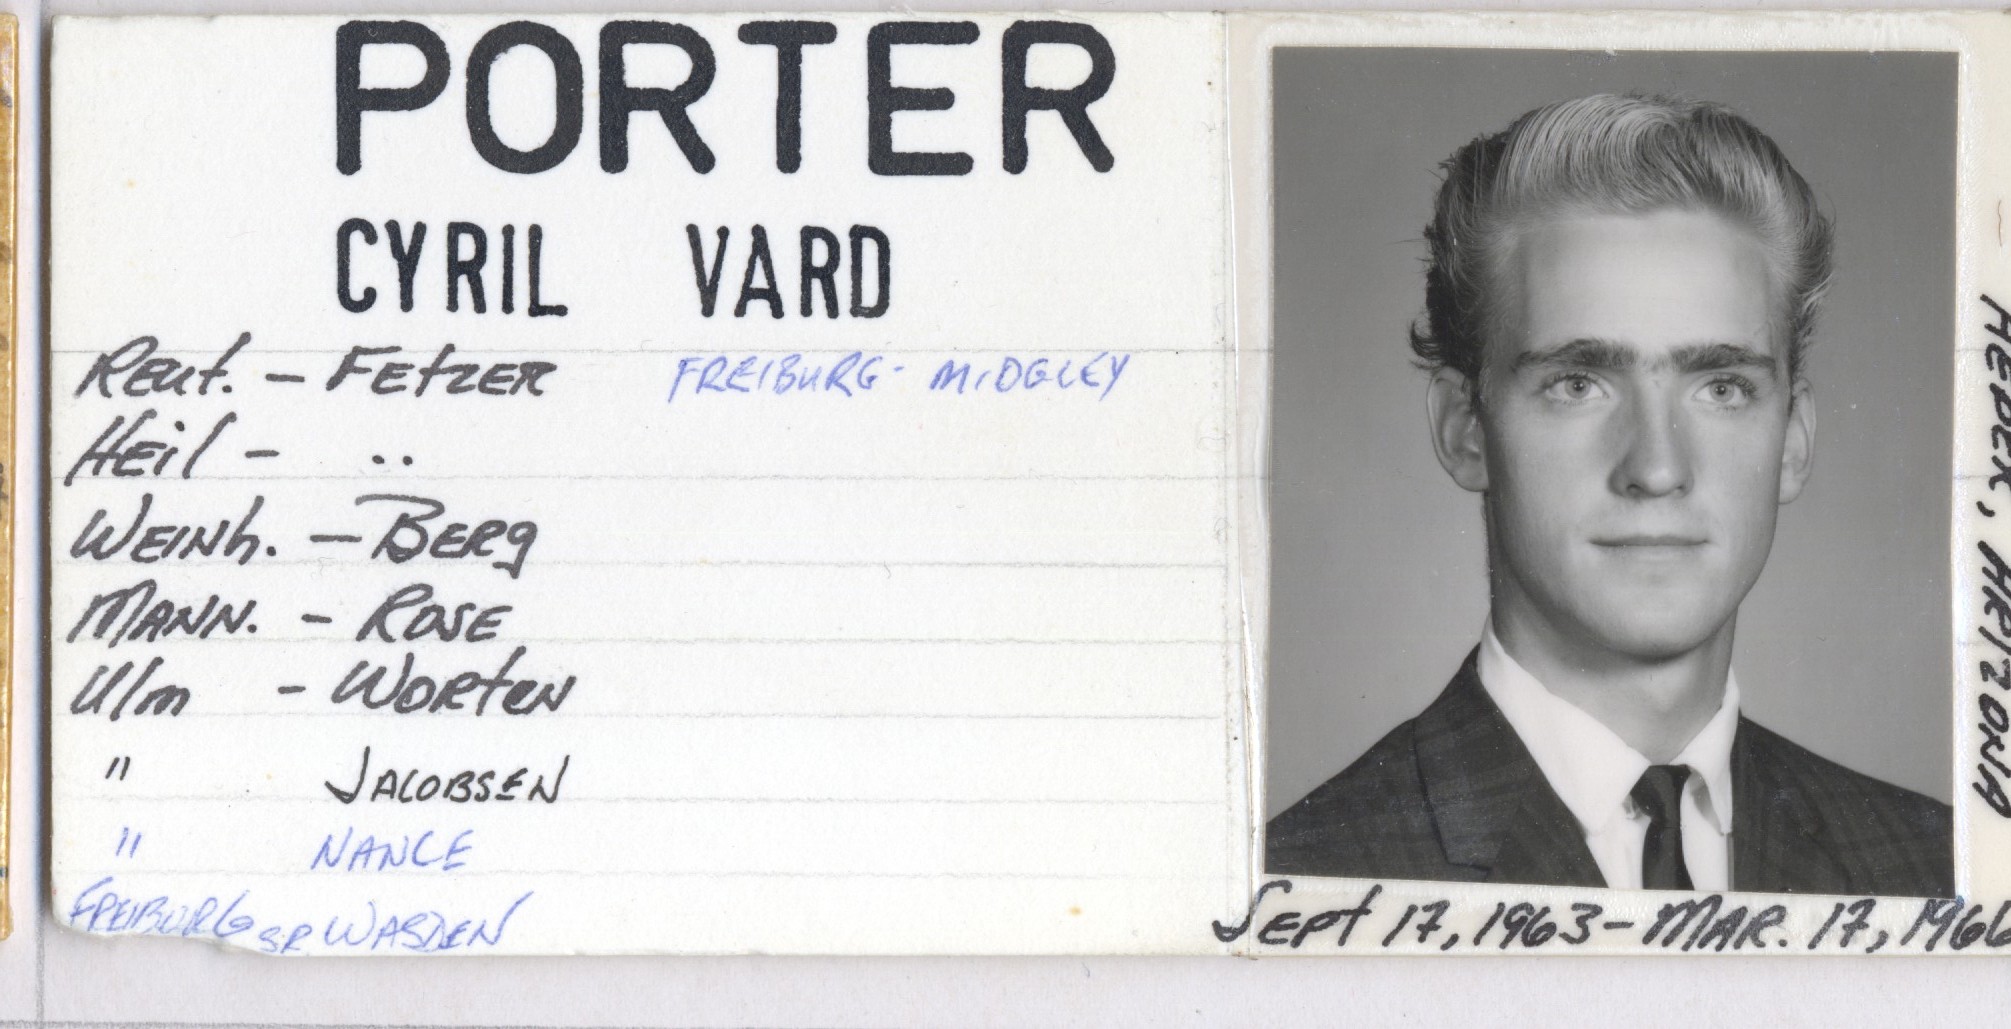 Porter, Cyril Vard